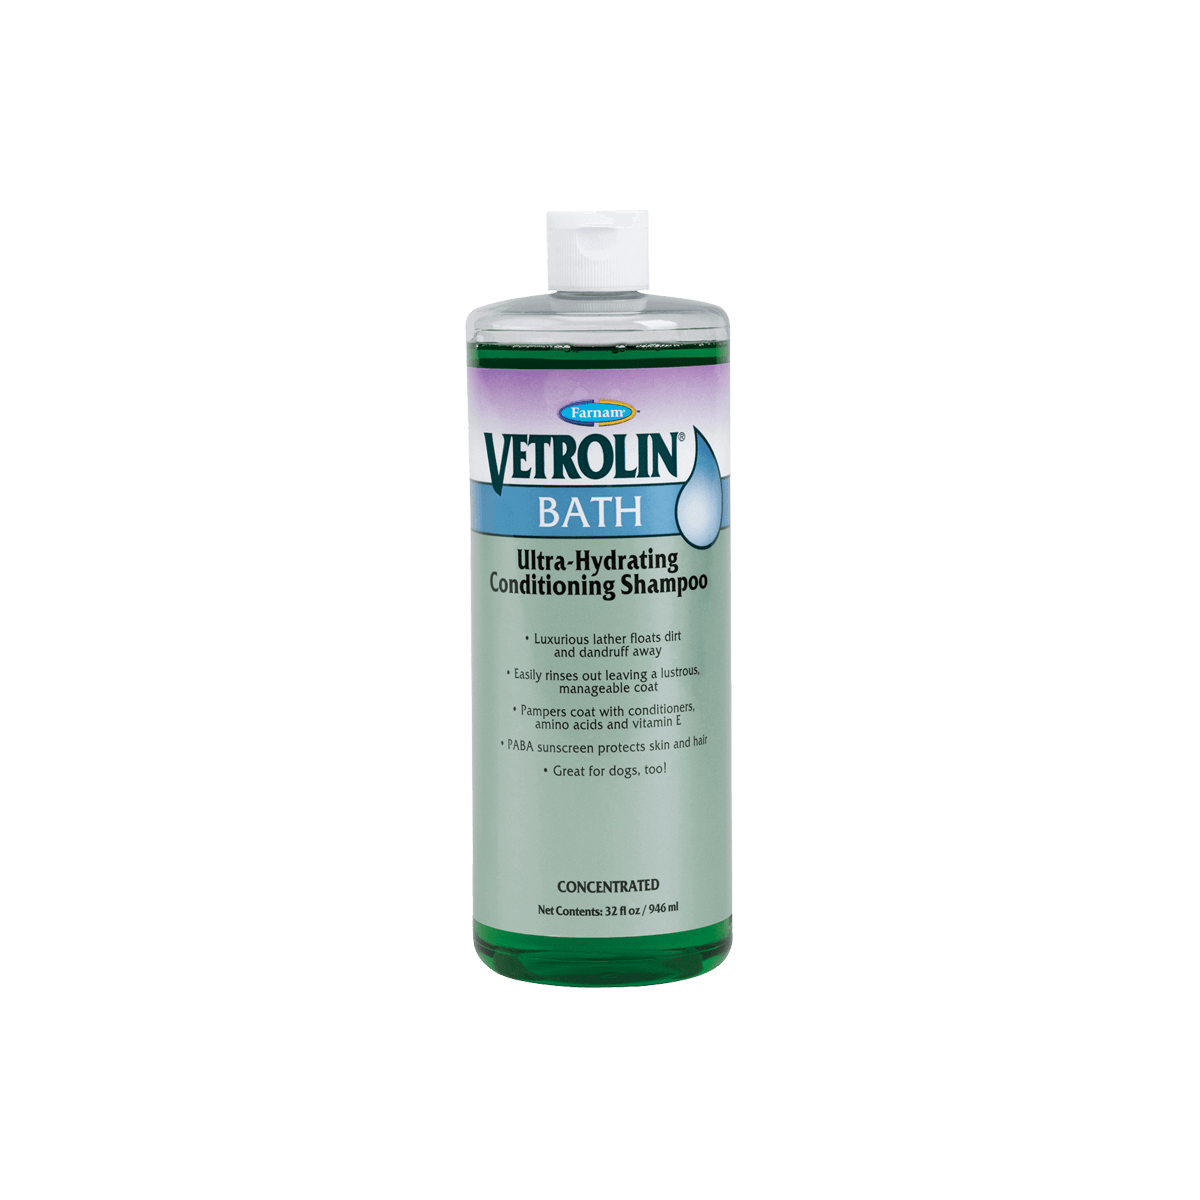 Vetrolin Bath Ultra Hydrating and Conditioning Shampoo 1.89L